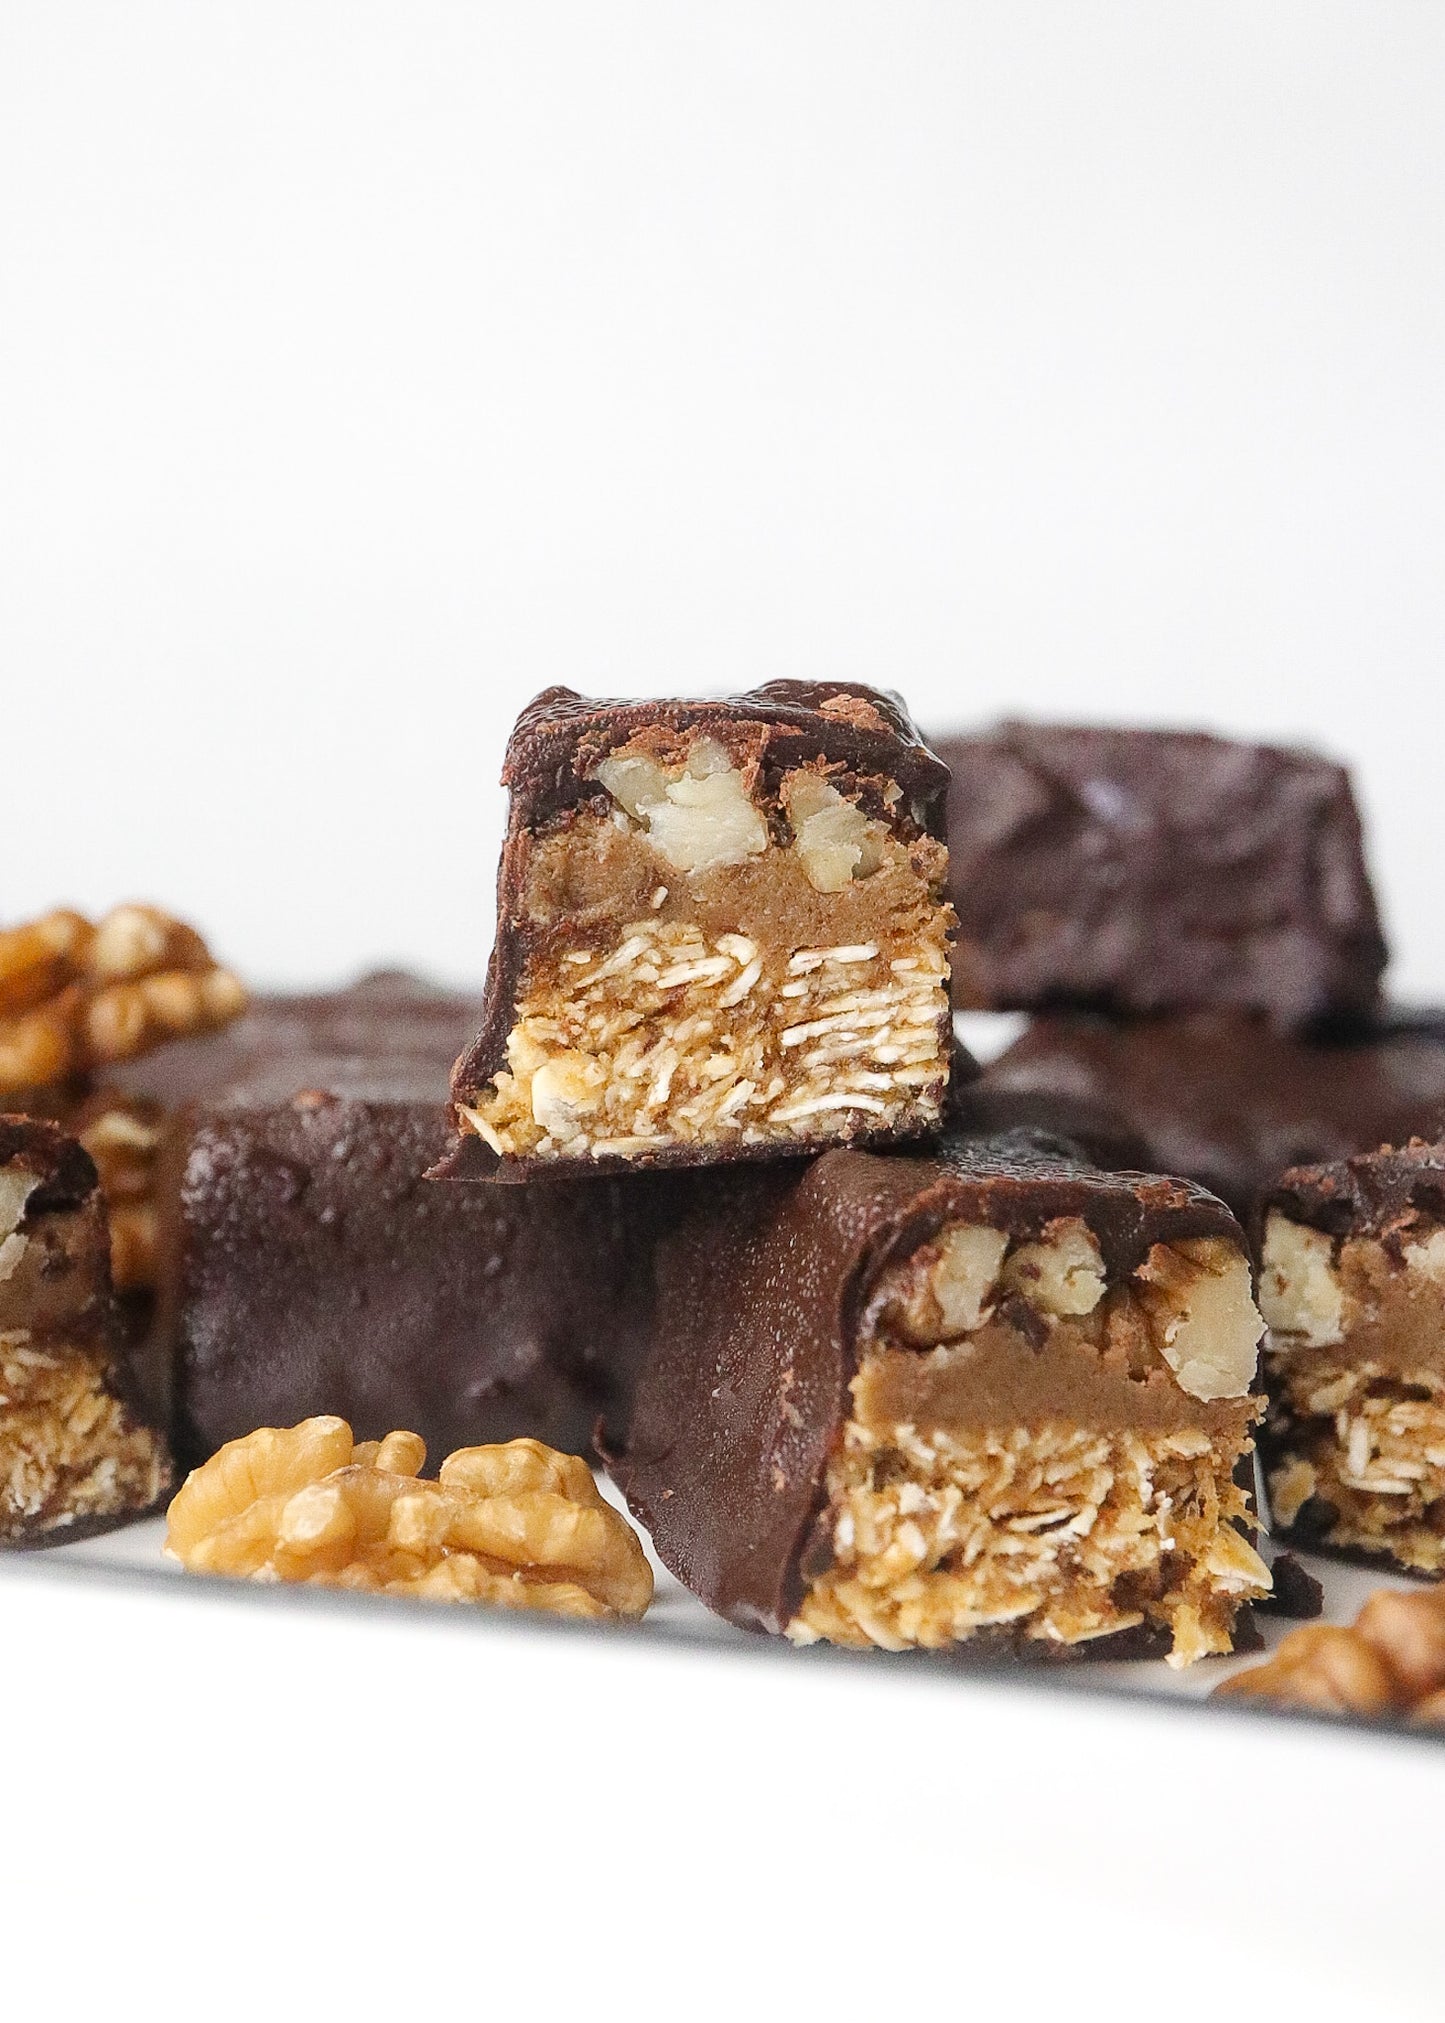 Best Seller: Walnut Chocolate Protein Bars - 65 grams